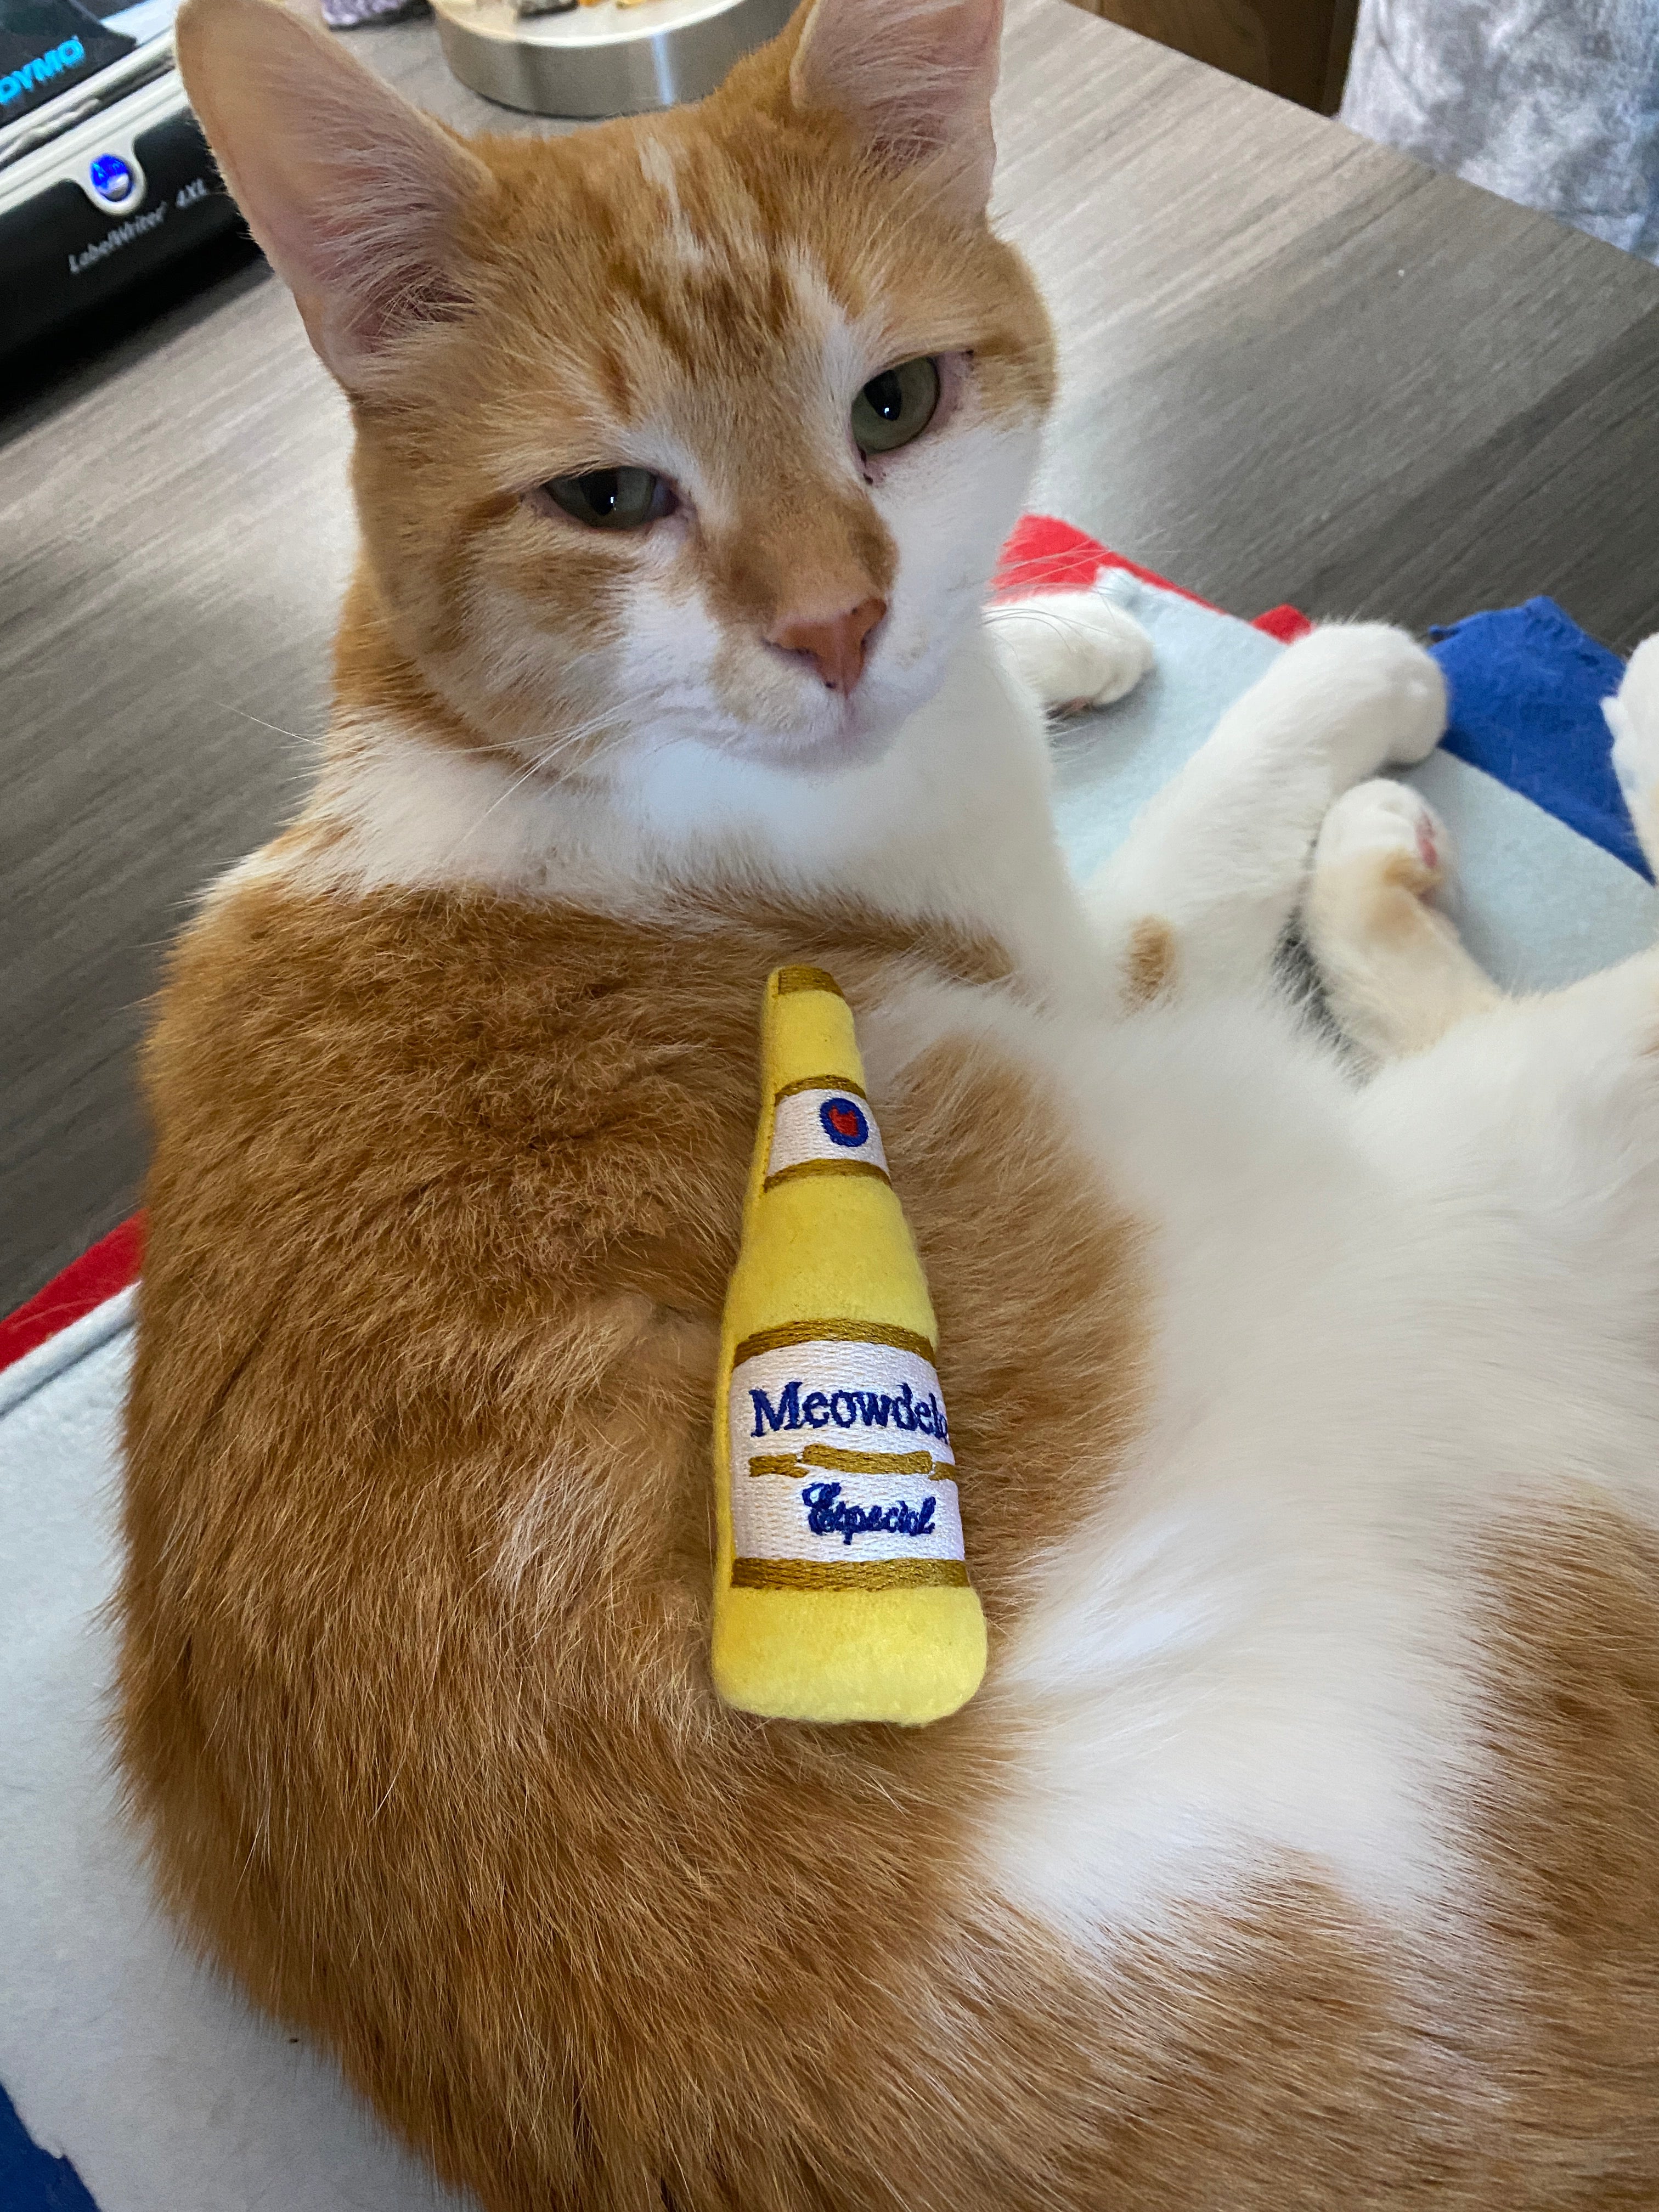 Meowdelo Modelo Beer Cat Toy - Catnip Toy